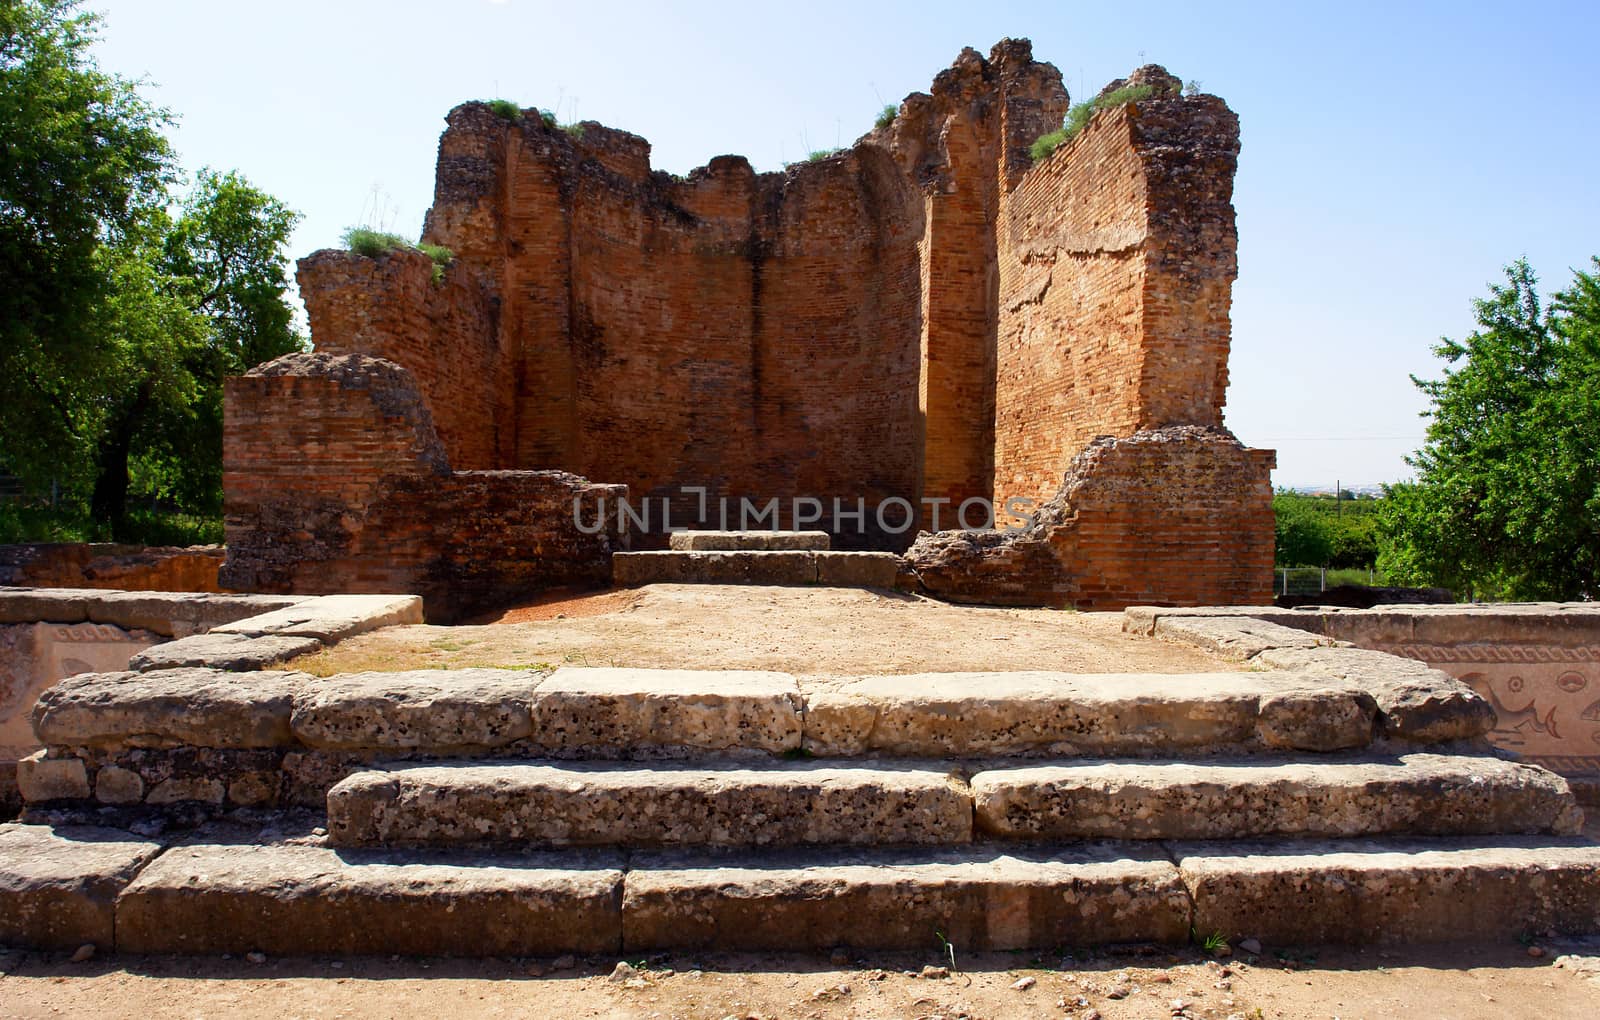 Roman temple ruins of "Milreu" by ptxgarfield